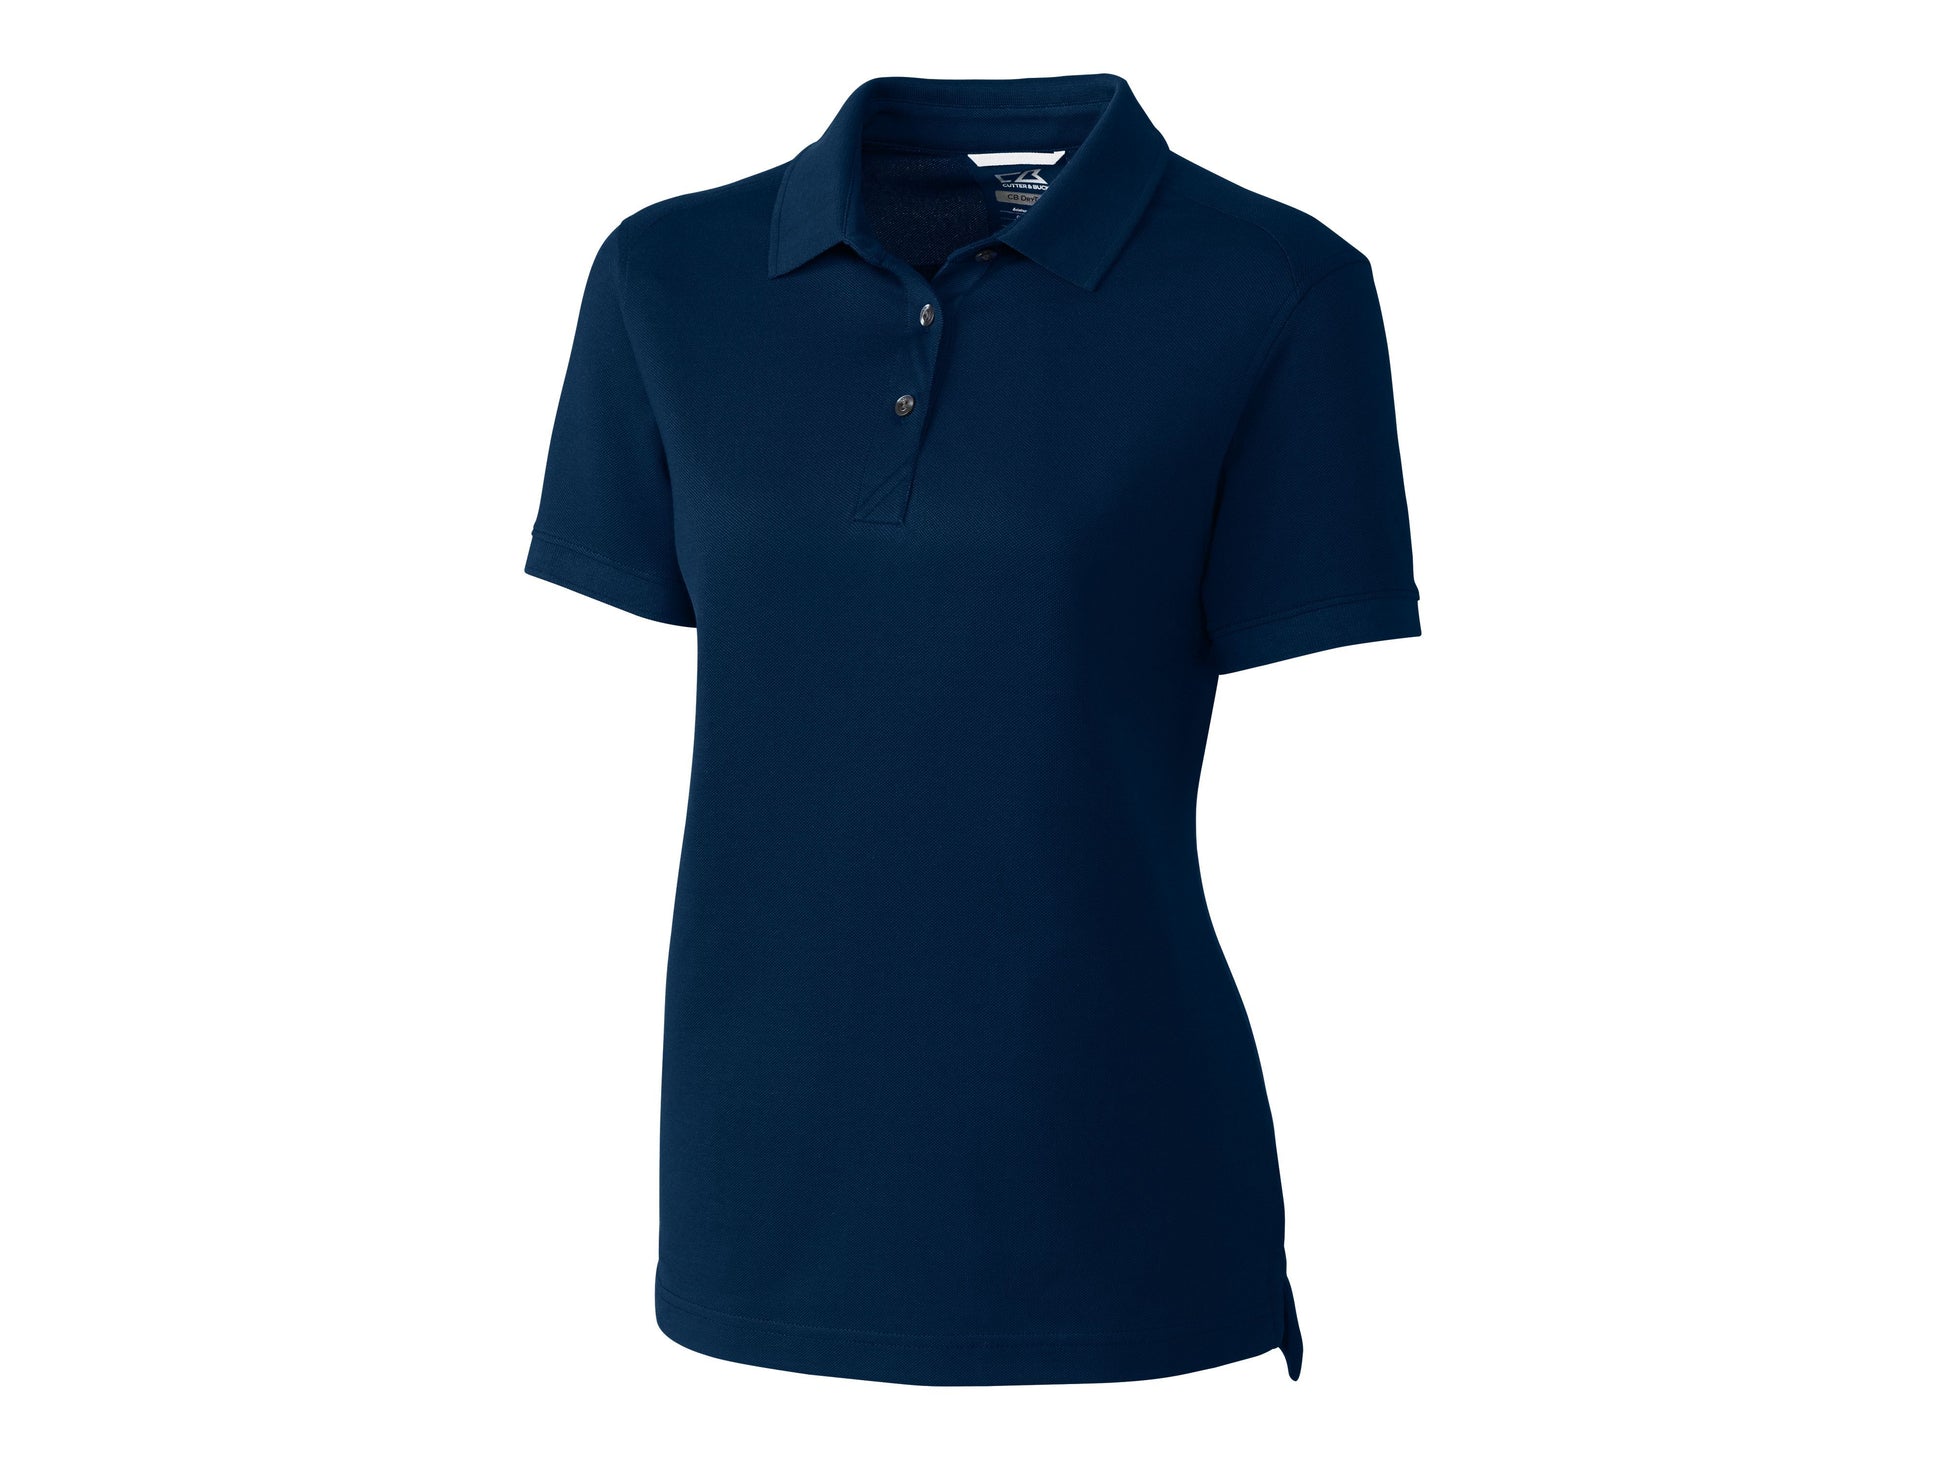 Cutter and Buck Shirts Advantage Polo (Women's Cut) - LCK08685 - Liberty Navy